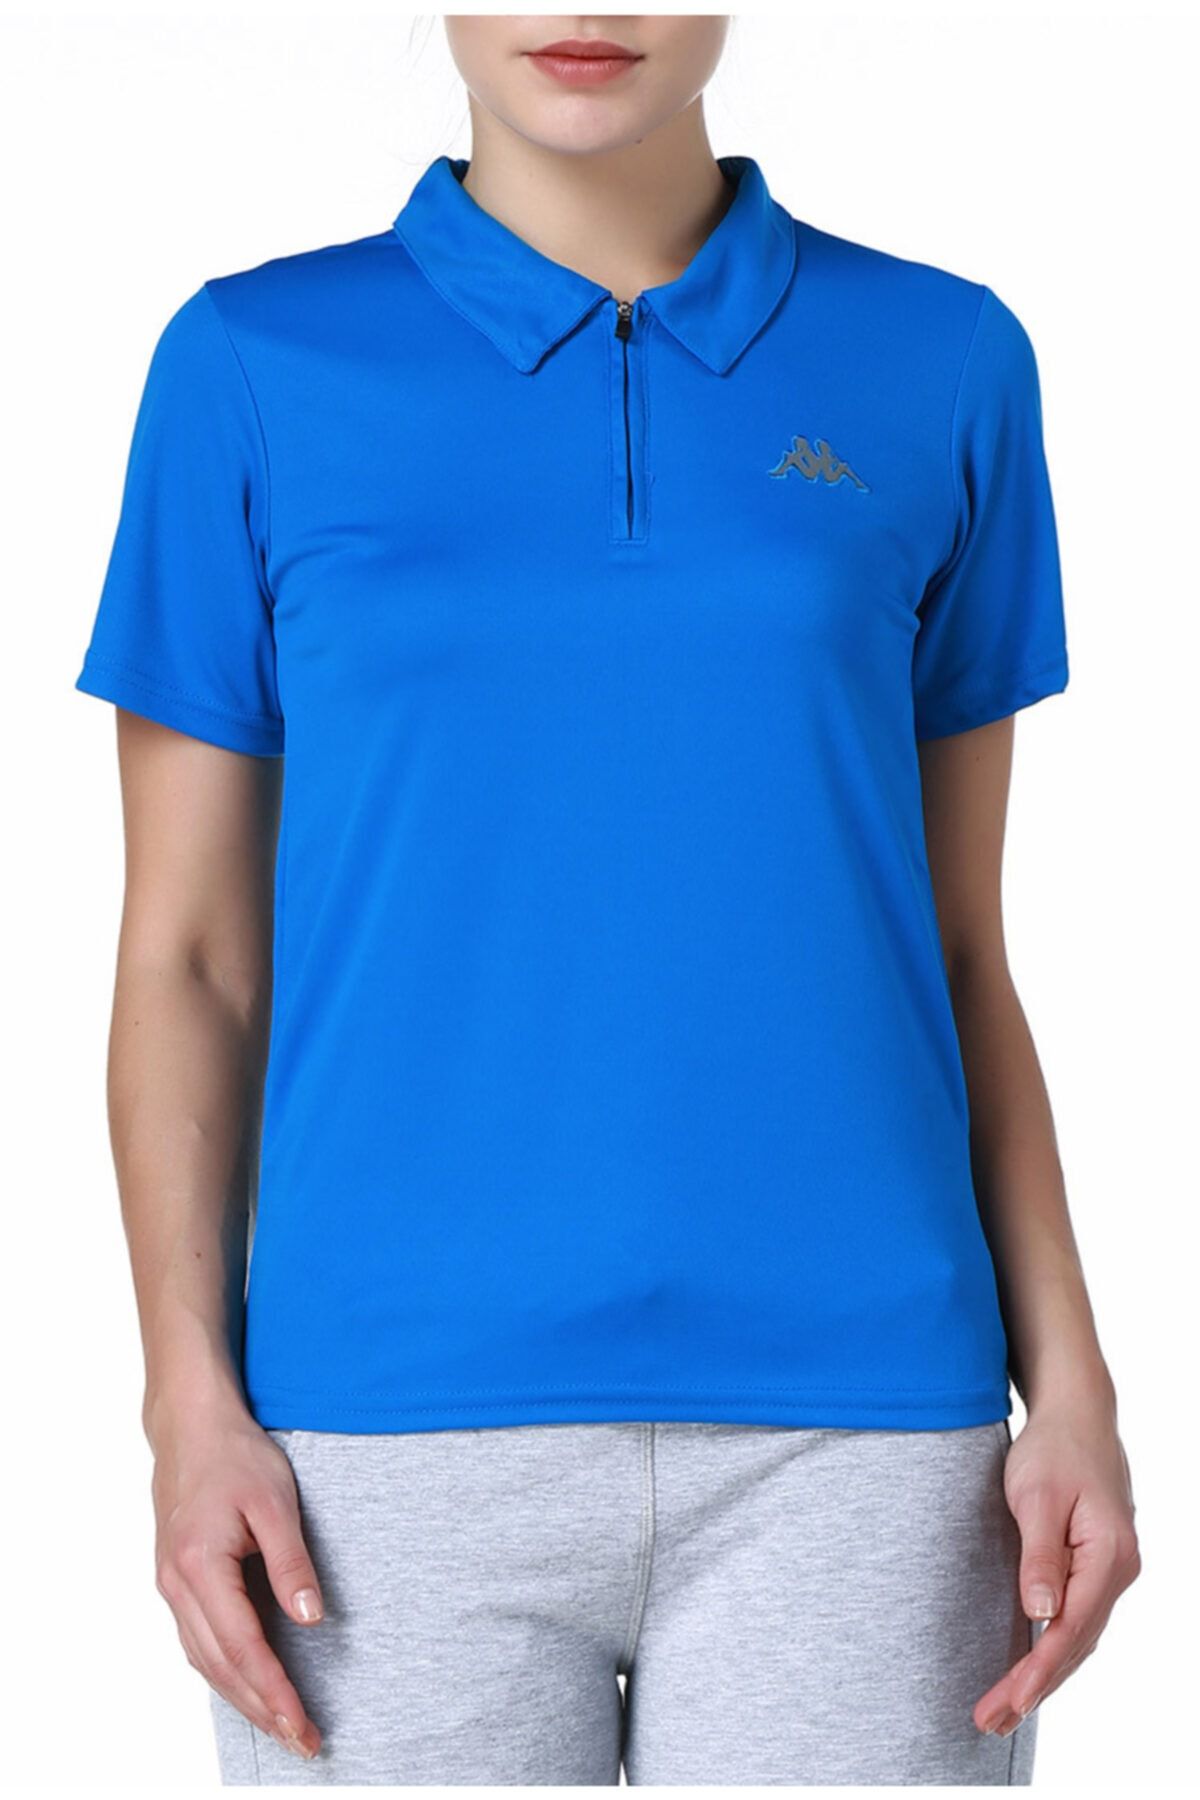 Kappa Kadın Mavi Polo Slim Fit T-shirt